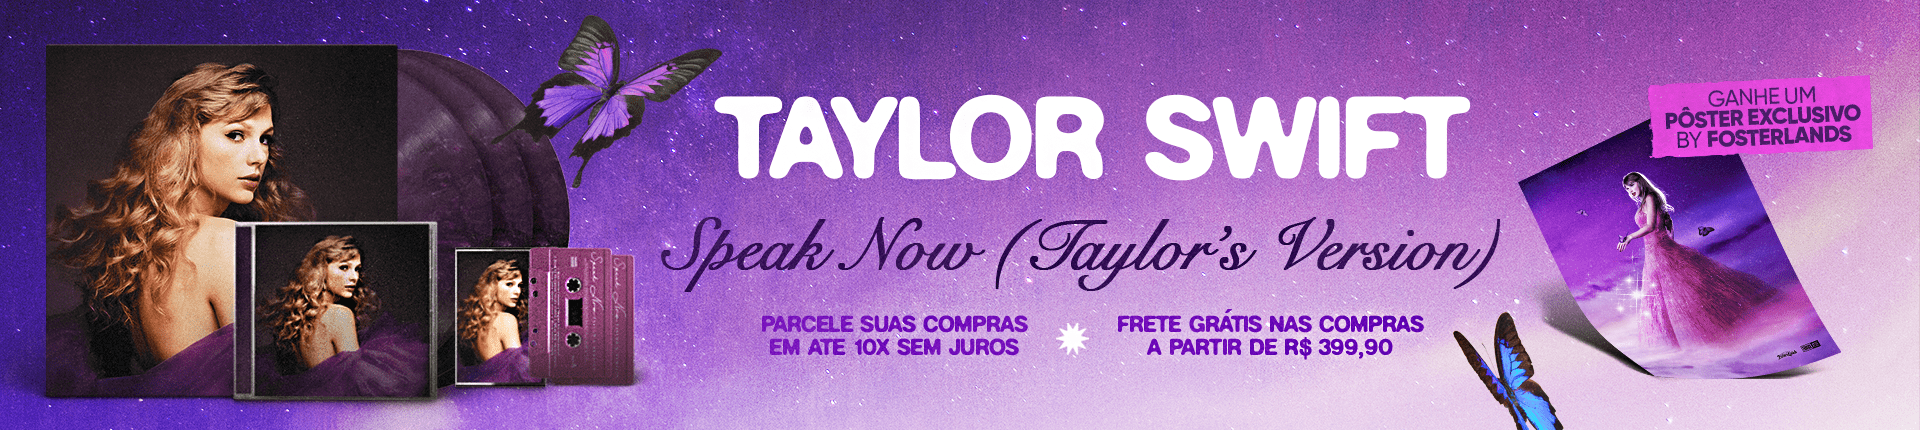 Taylor - Speak Now (Taylor's Version)